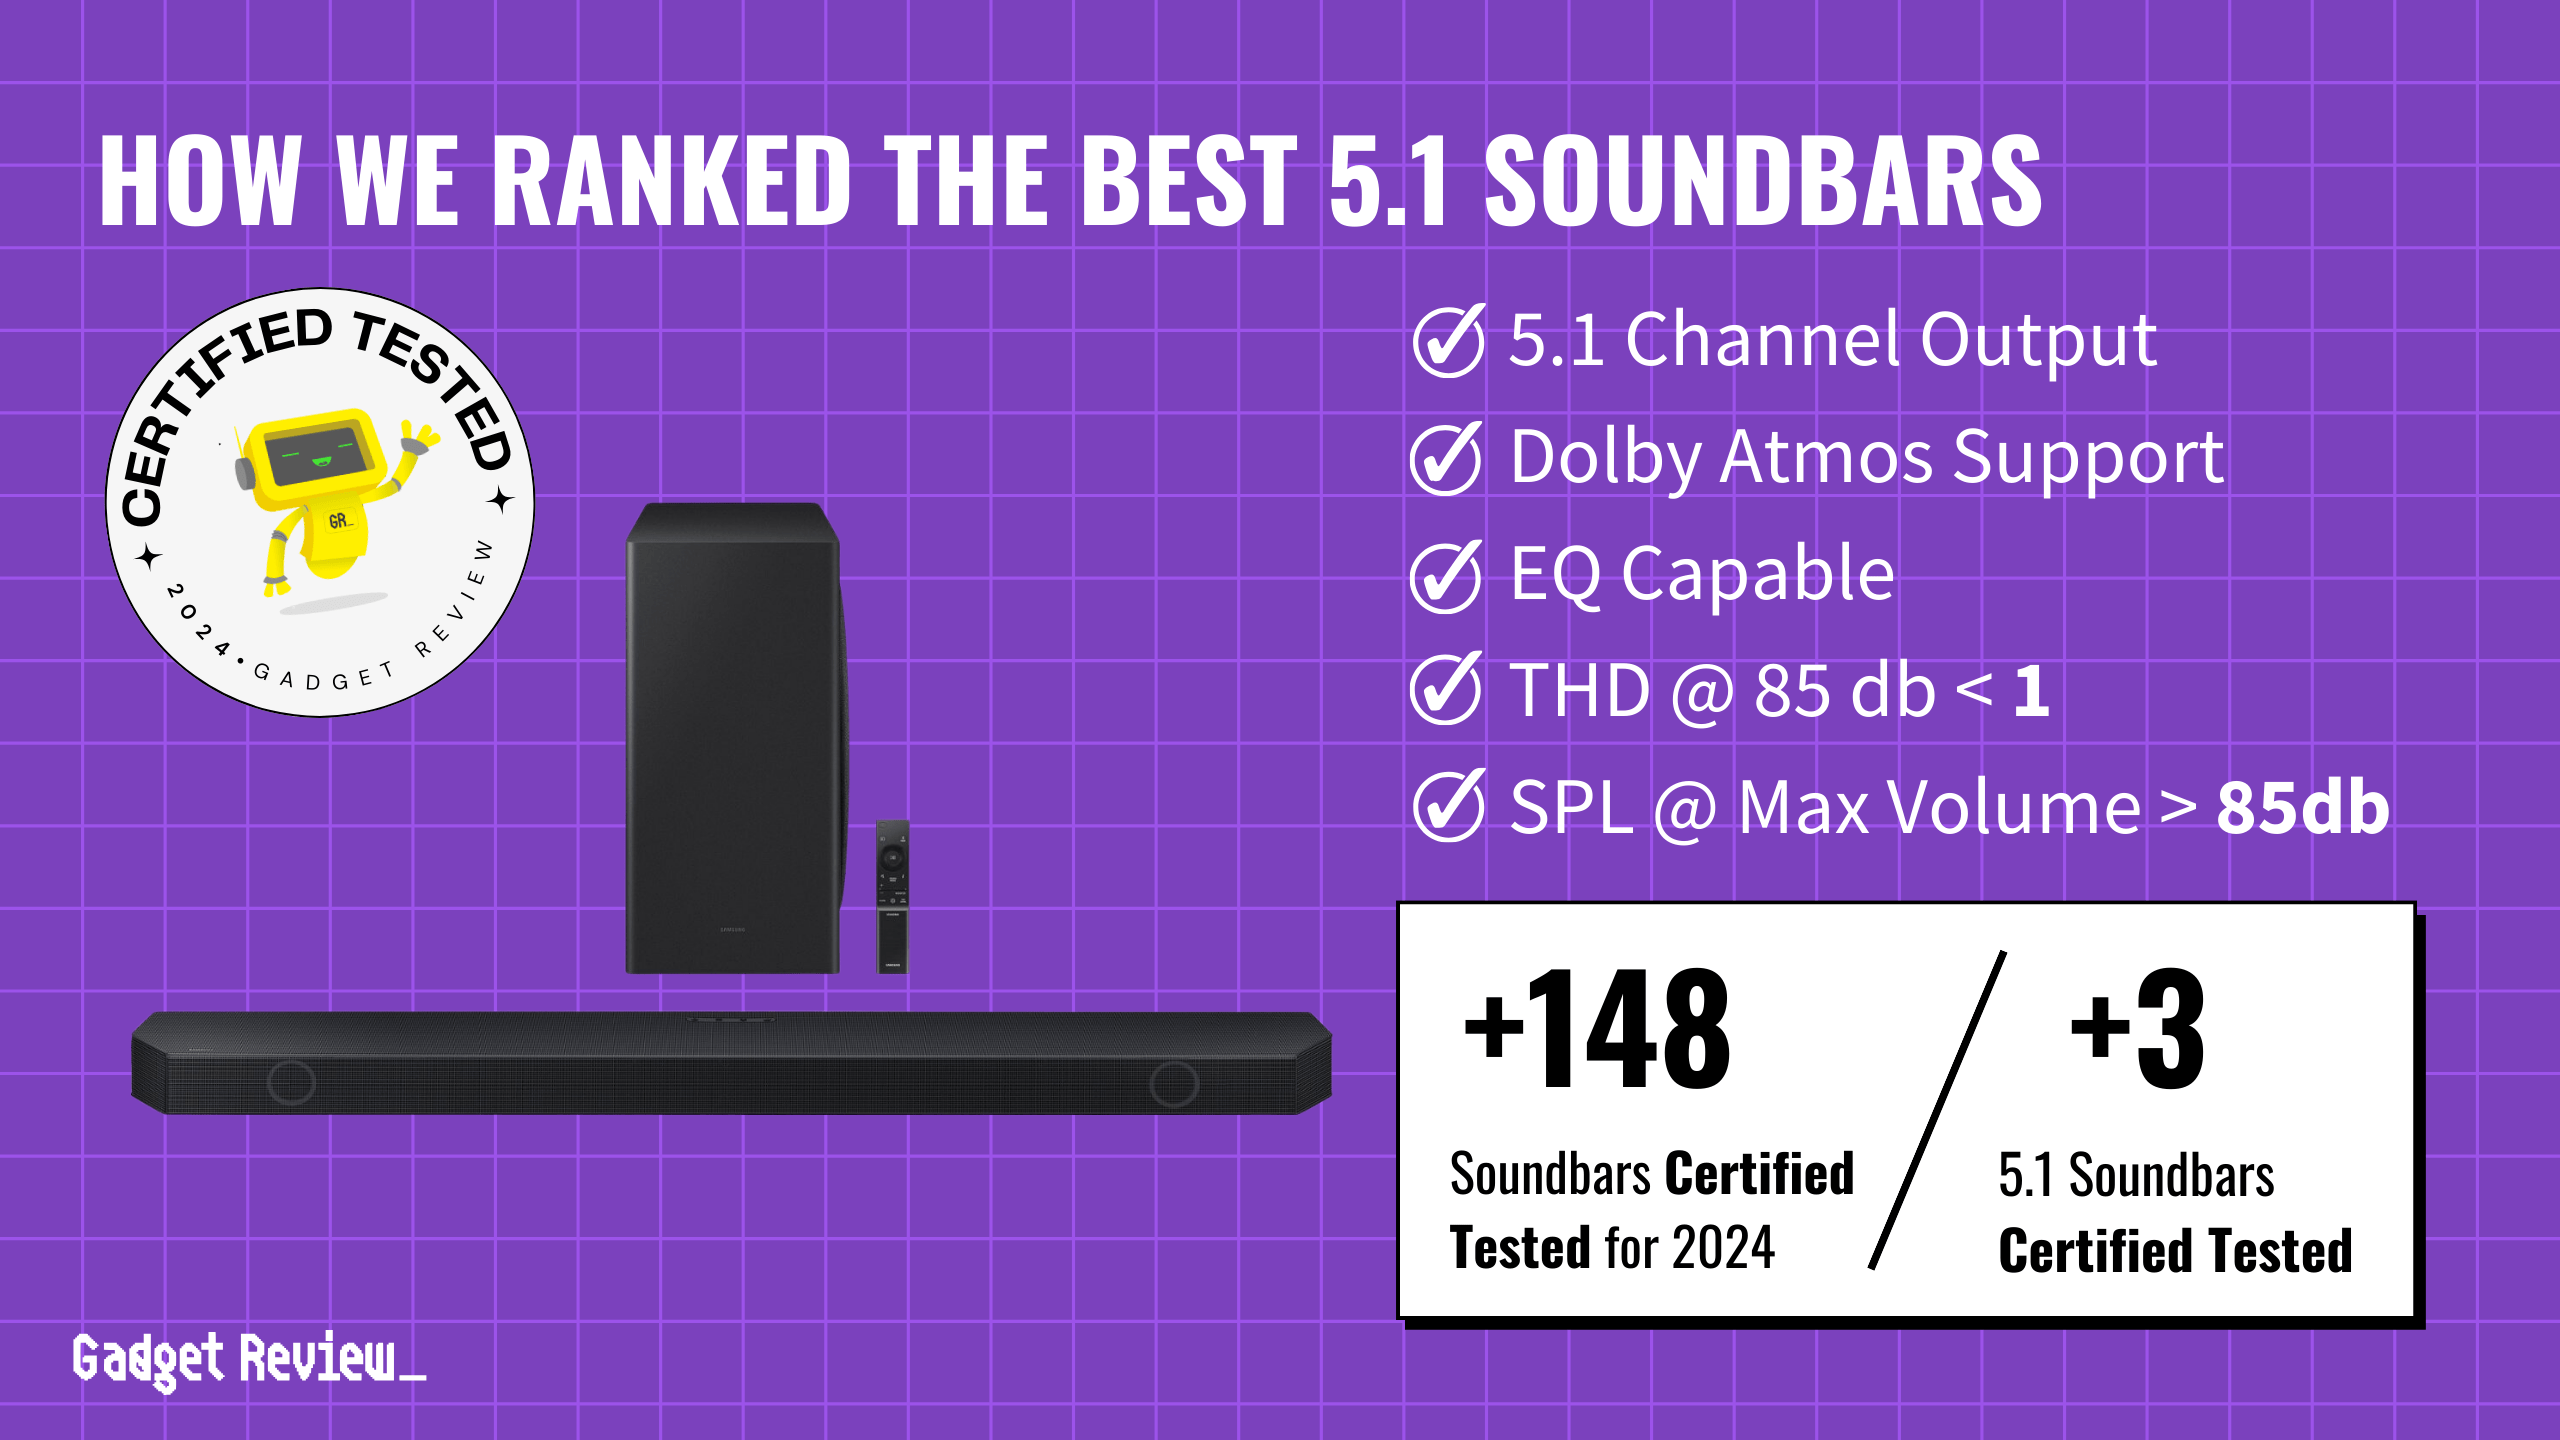 best 5.1 soundbar guide that shows the top best soundbar model